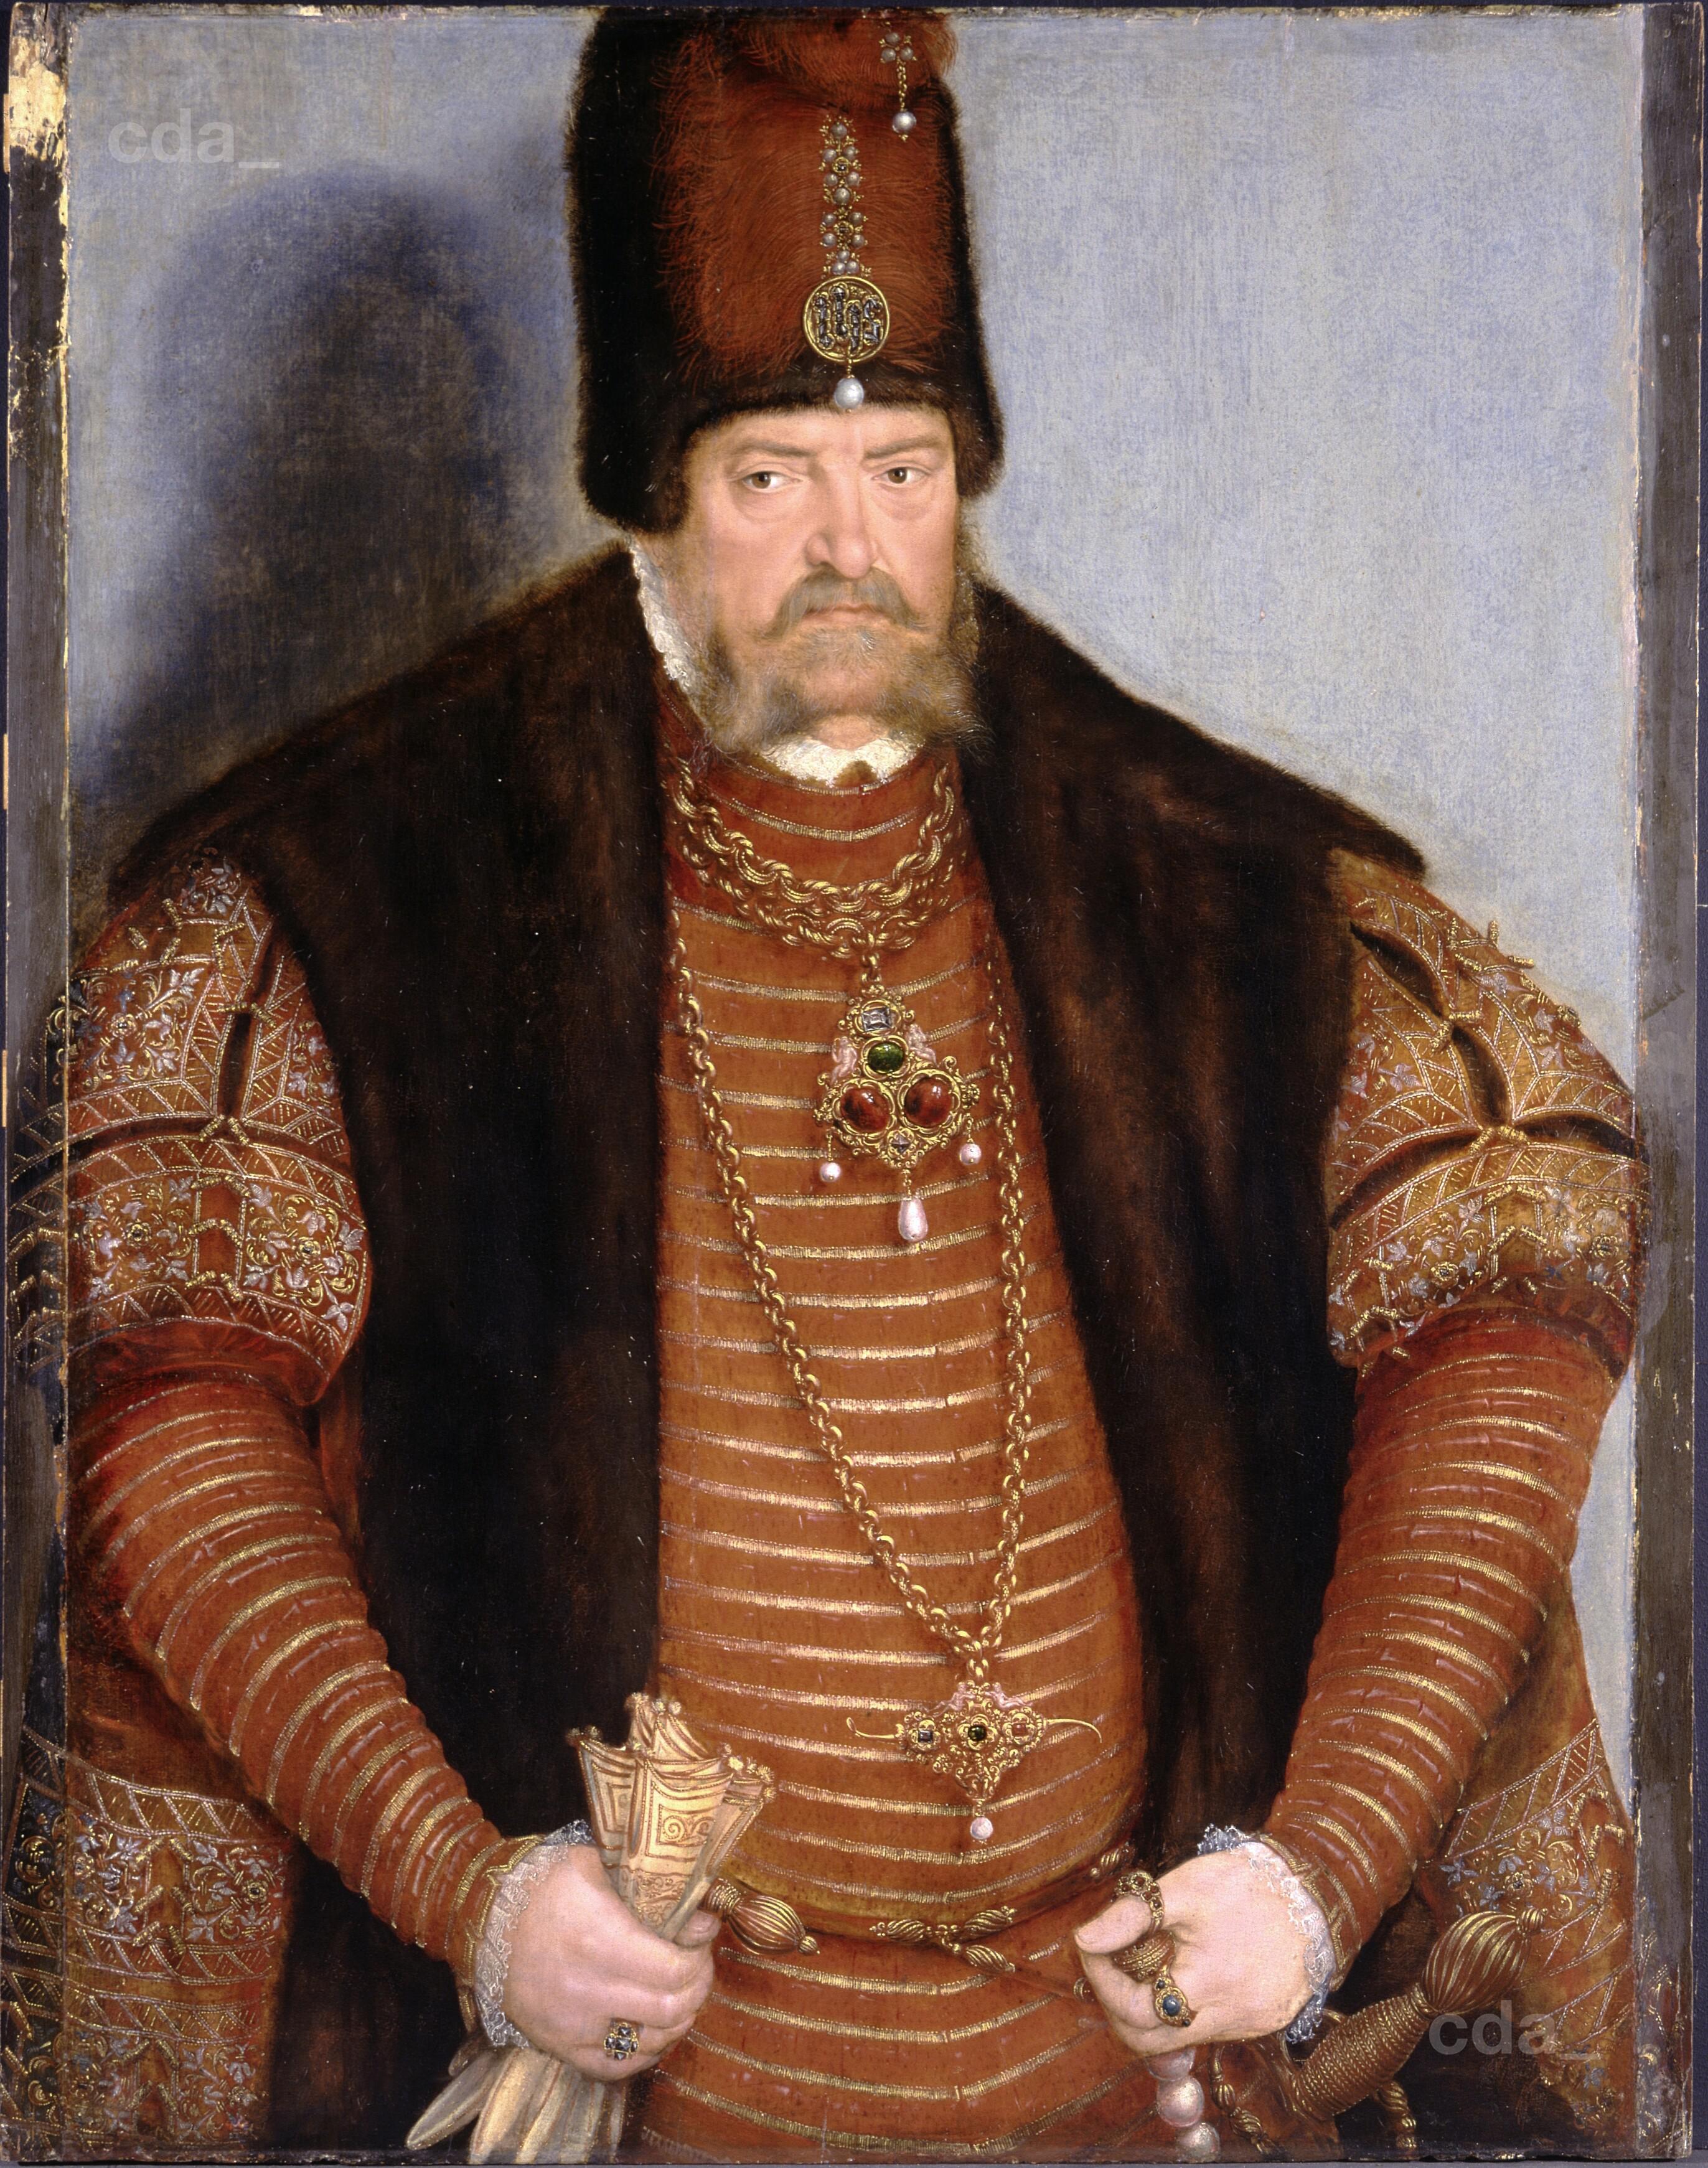 Elector Joachim II of Brandenburg (DE SPSG GKI1113)